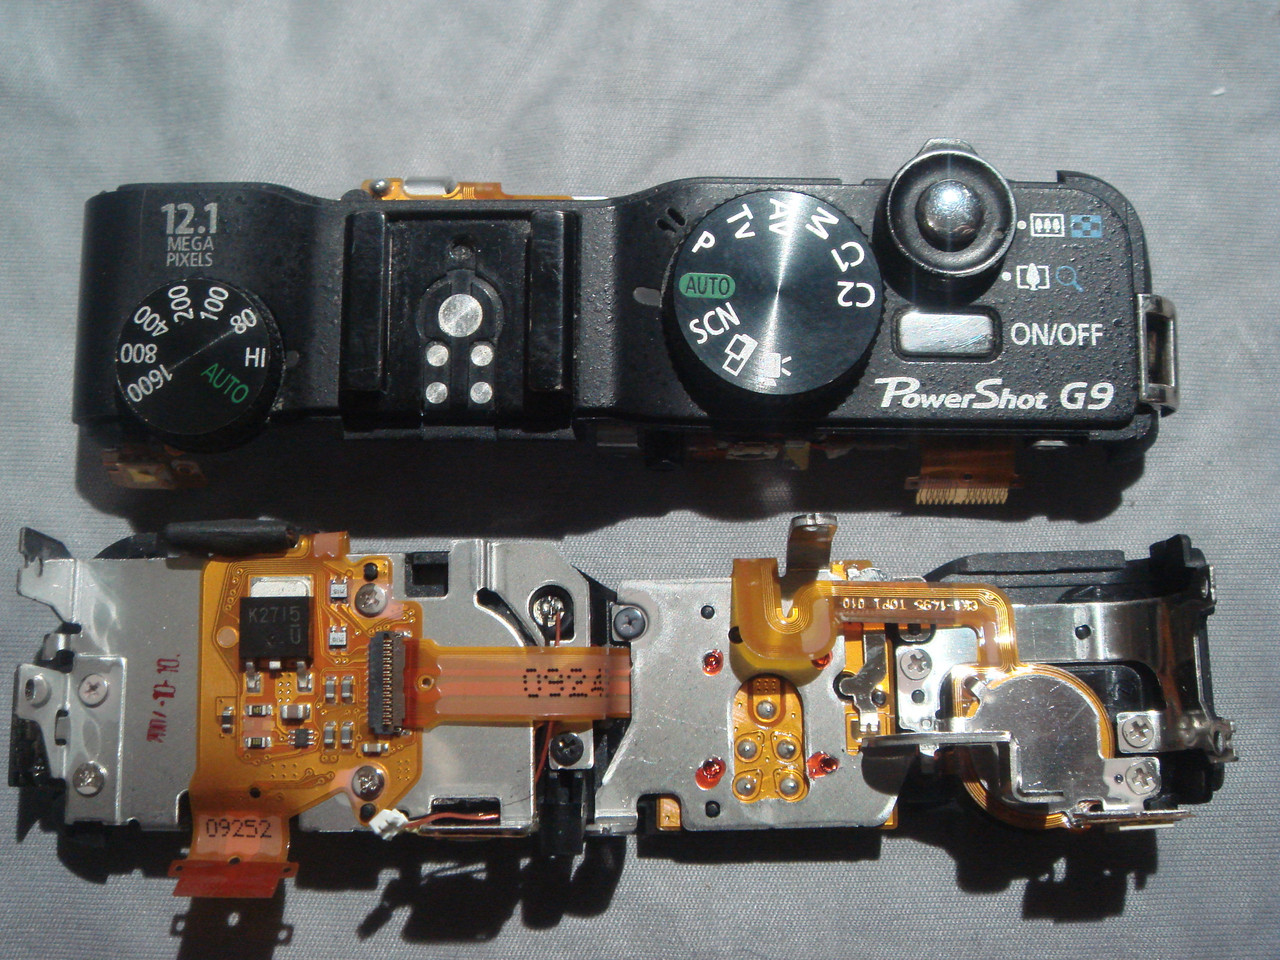  верхня частина Canon G9, PC1250 оригінал